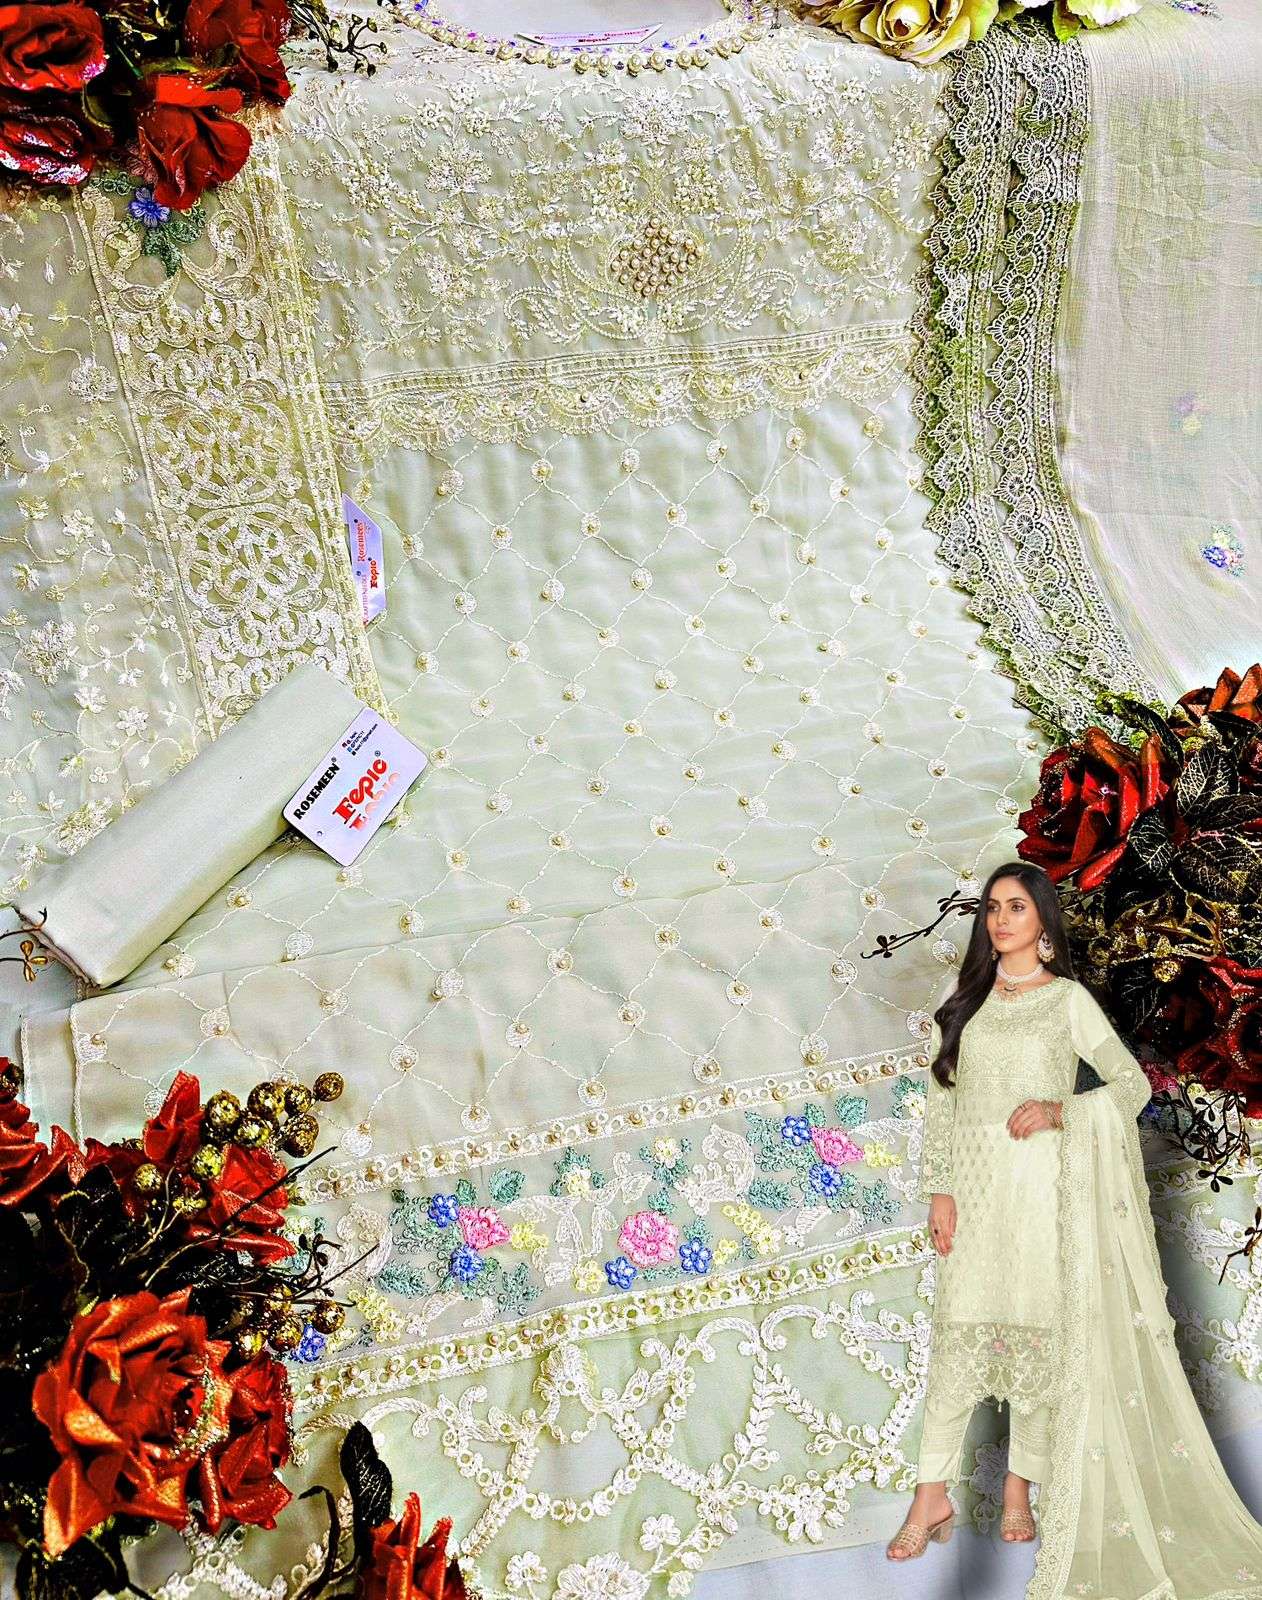 fepic 1510 goergette fancy embroidered salwar suits wholesale price online supplier surat